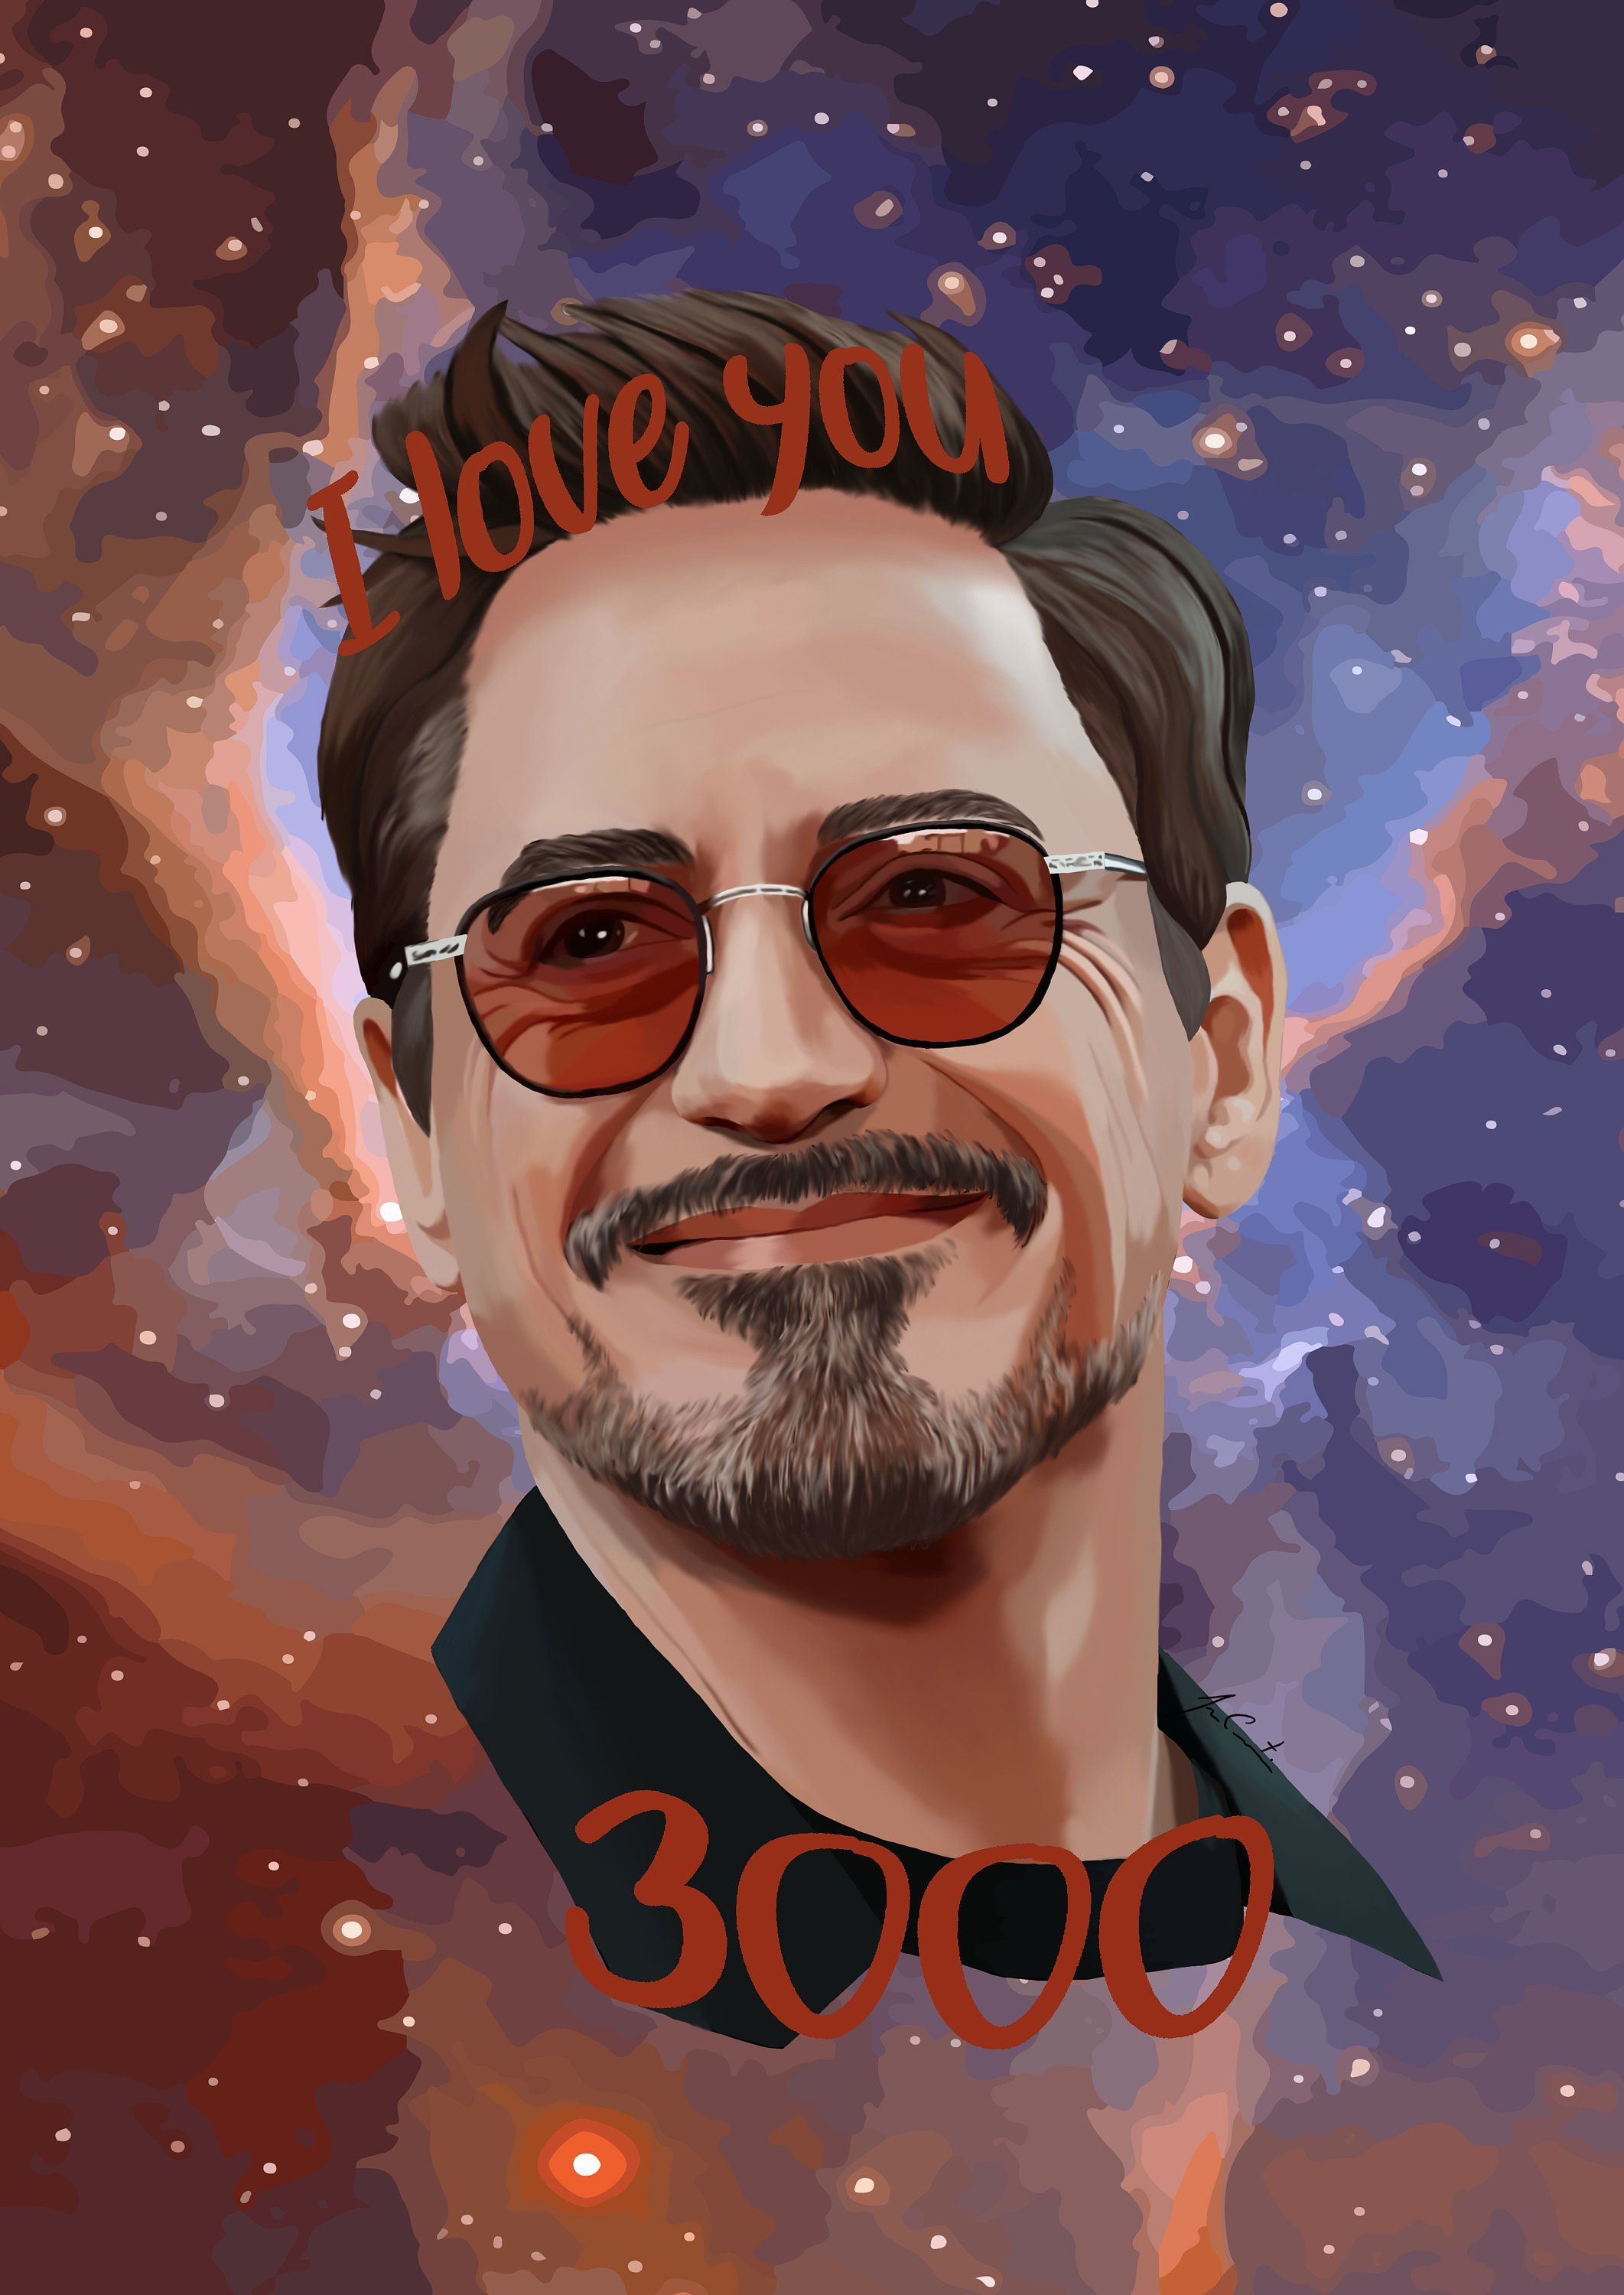 Tony Stark, Robert Downey Jr, Avengers, I love you 3000 Poster, Robert Downey Jr Poster, Iron man Poster, Endgame Poster, Tony Stark Poster. Tony stark wallpaper, Robert downey jr